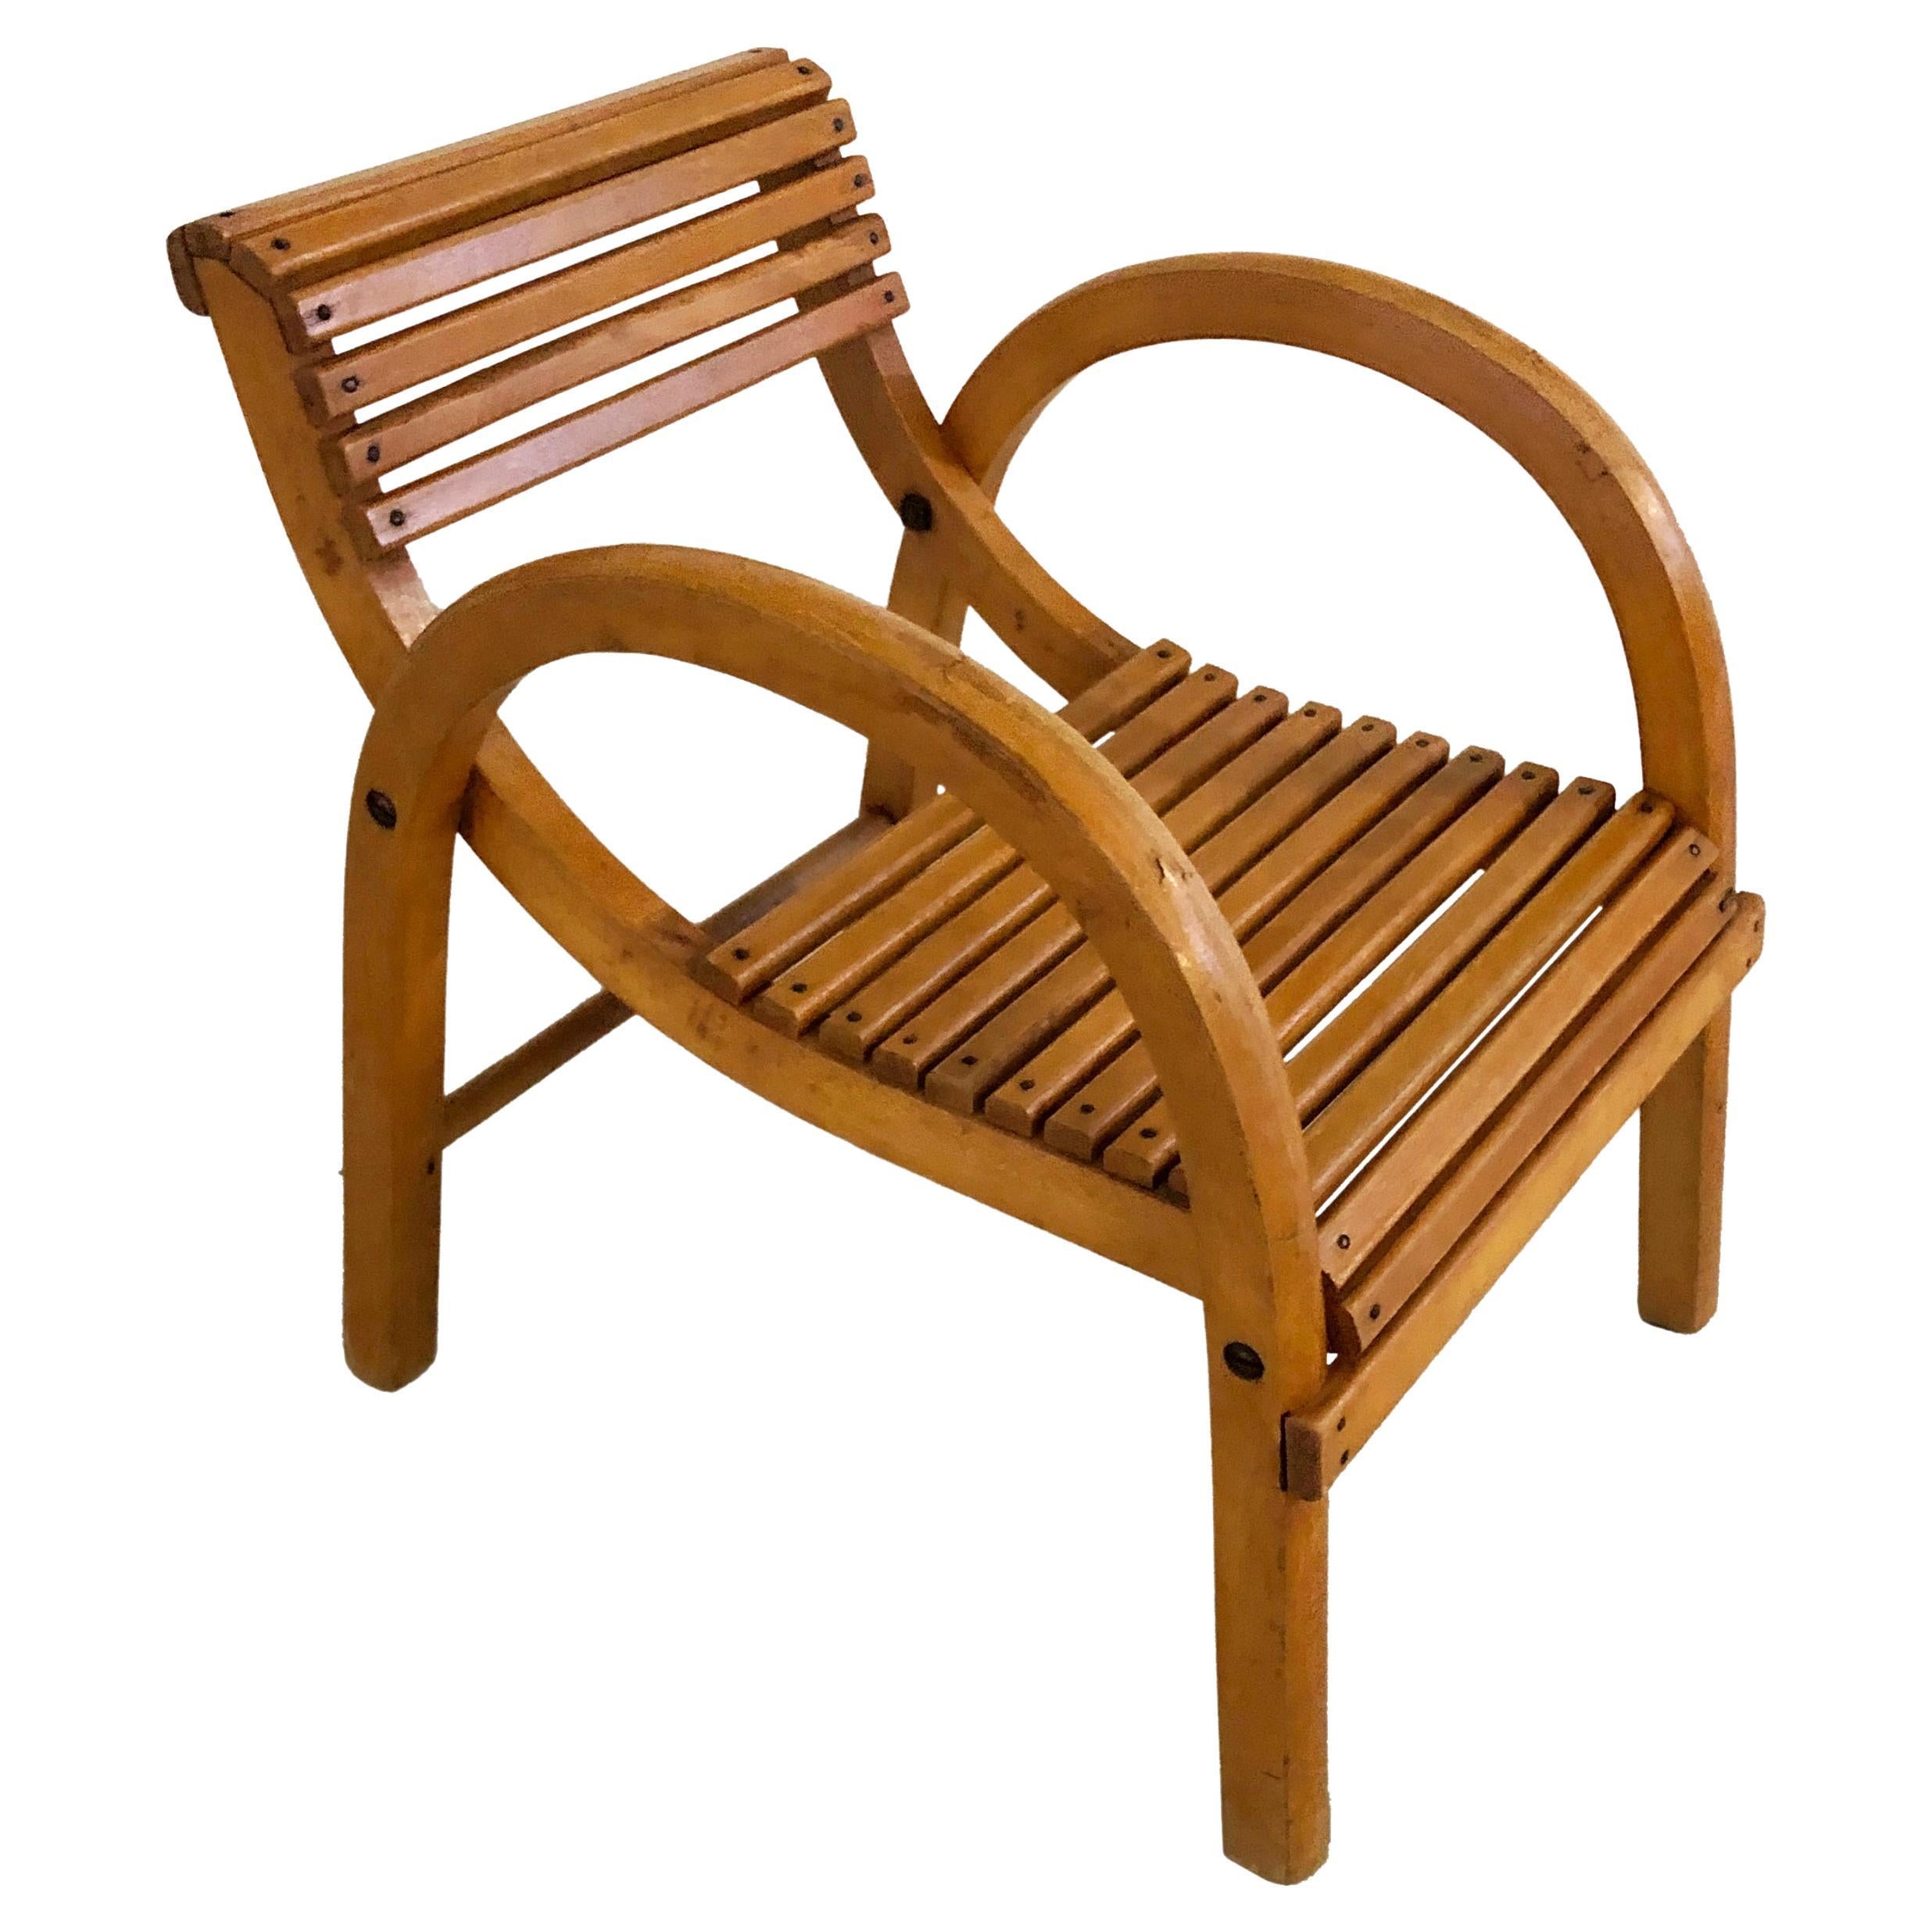 Baumann children's armchair 1930s - French modernist design Bentwood chair For Sale